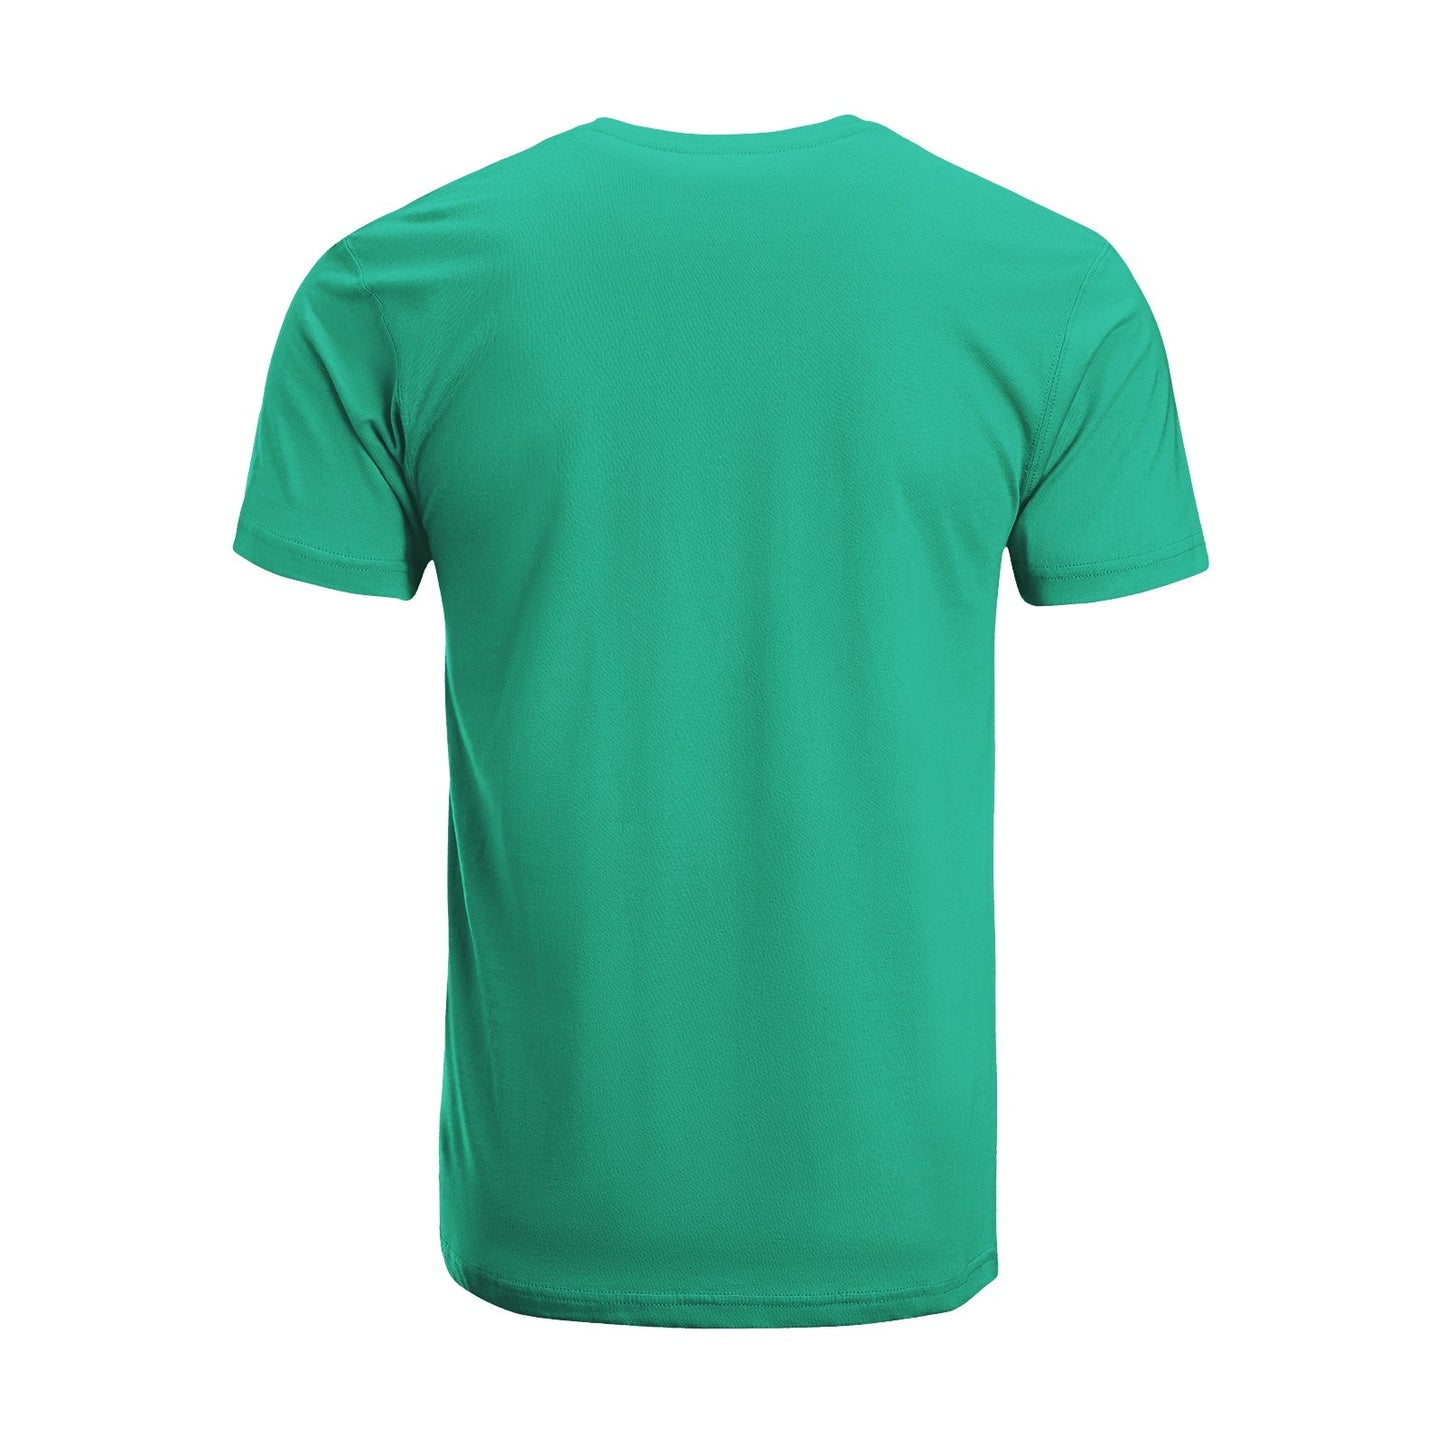 Unisex Short Sleeve Crew Neck Cotton Jersey T-Shirt Gym No. 15 - Tara-Outfits.com